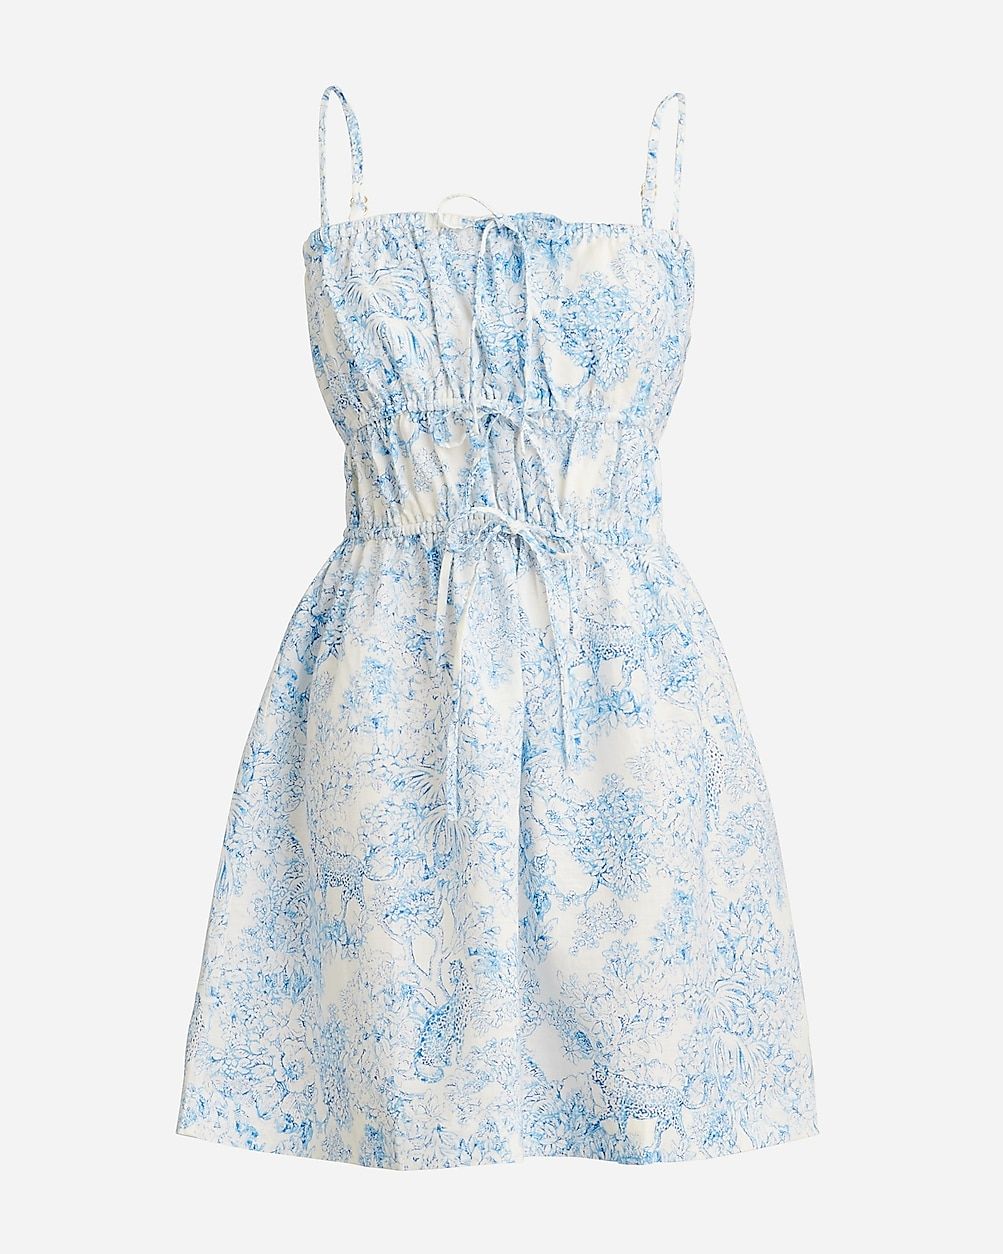 Bow-front mini dress in blue toile linen-cotton blend | J.Crew US